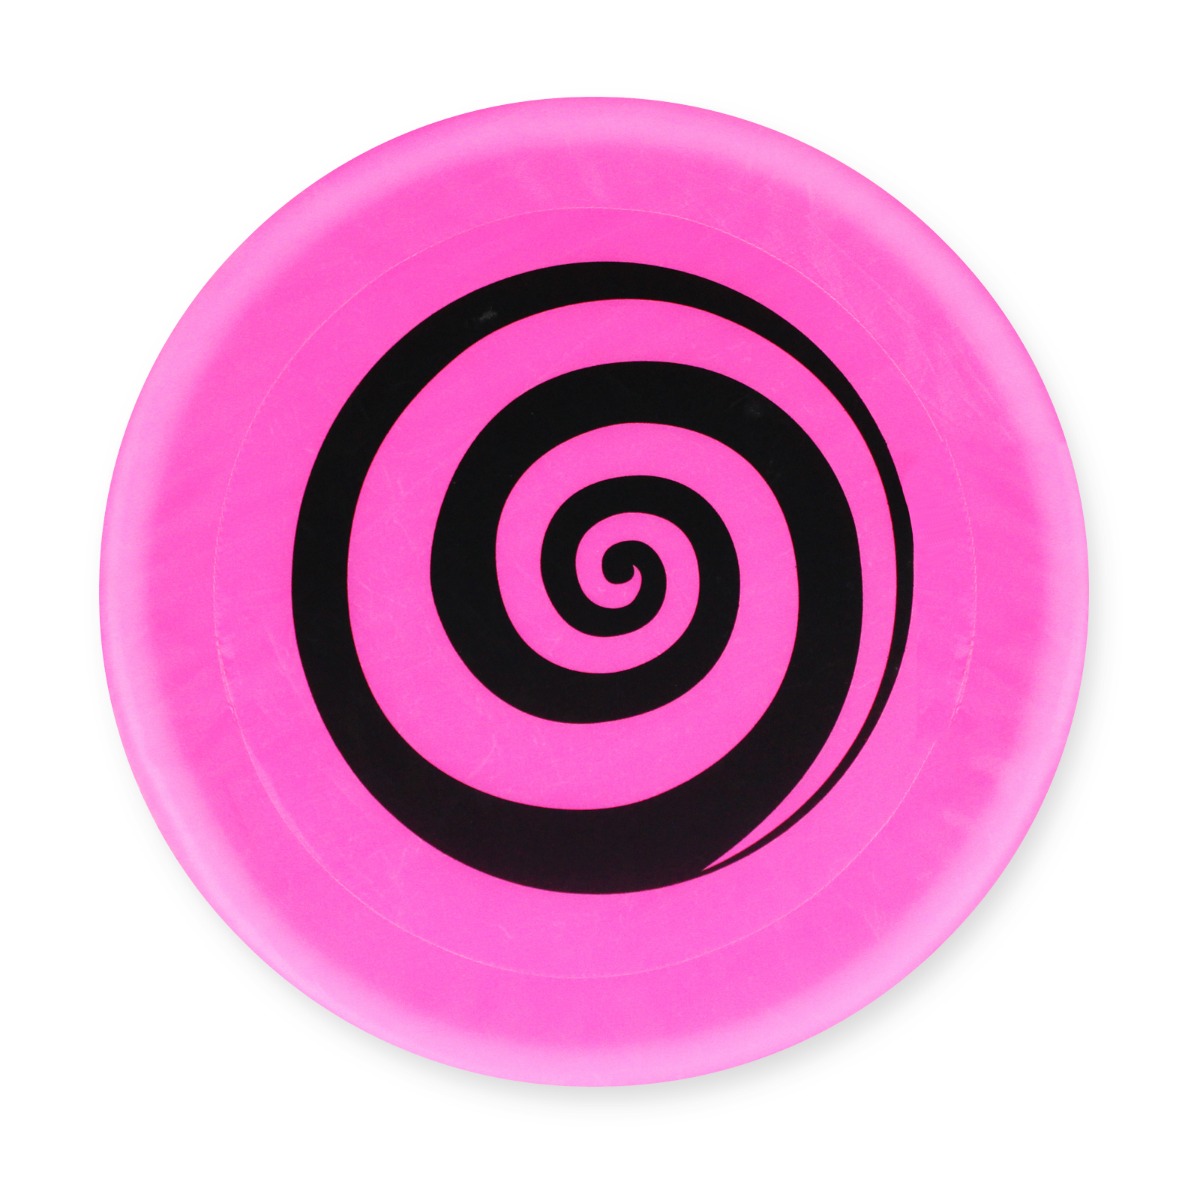 soft frisbee disc